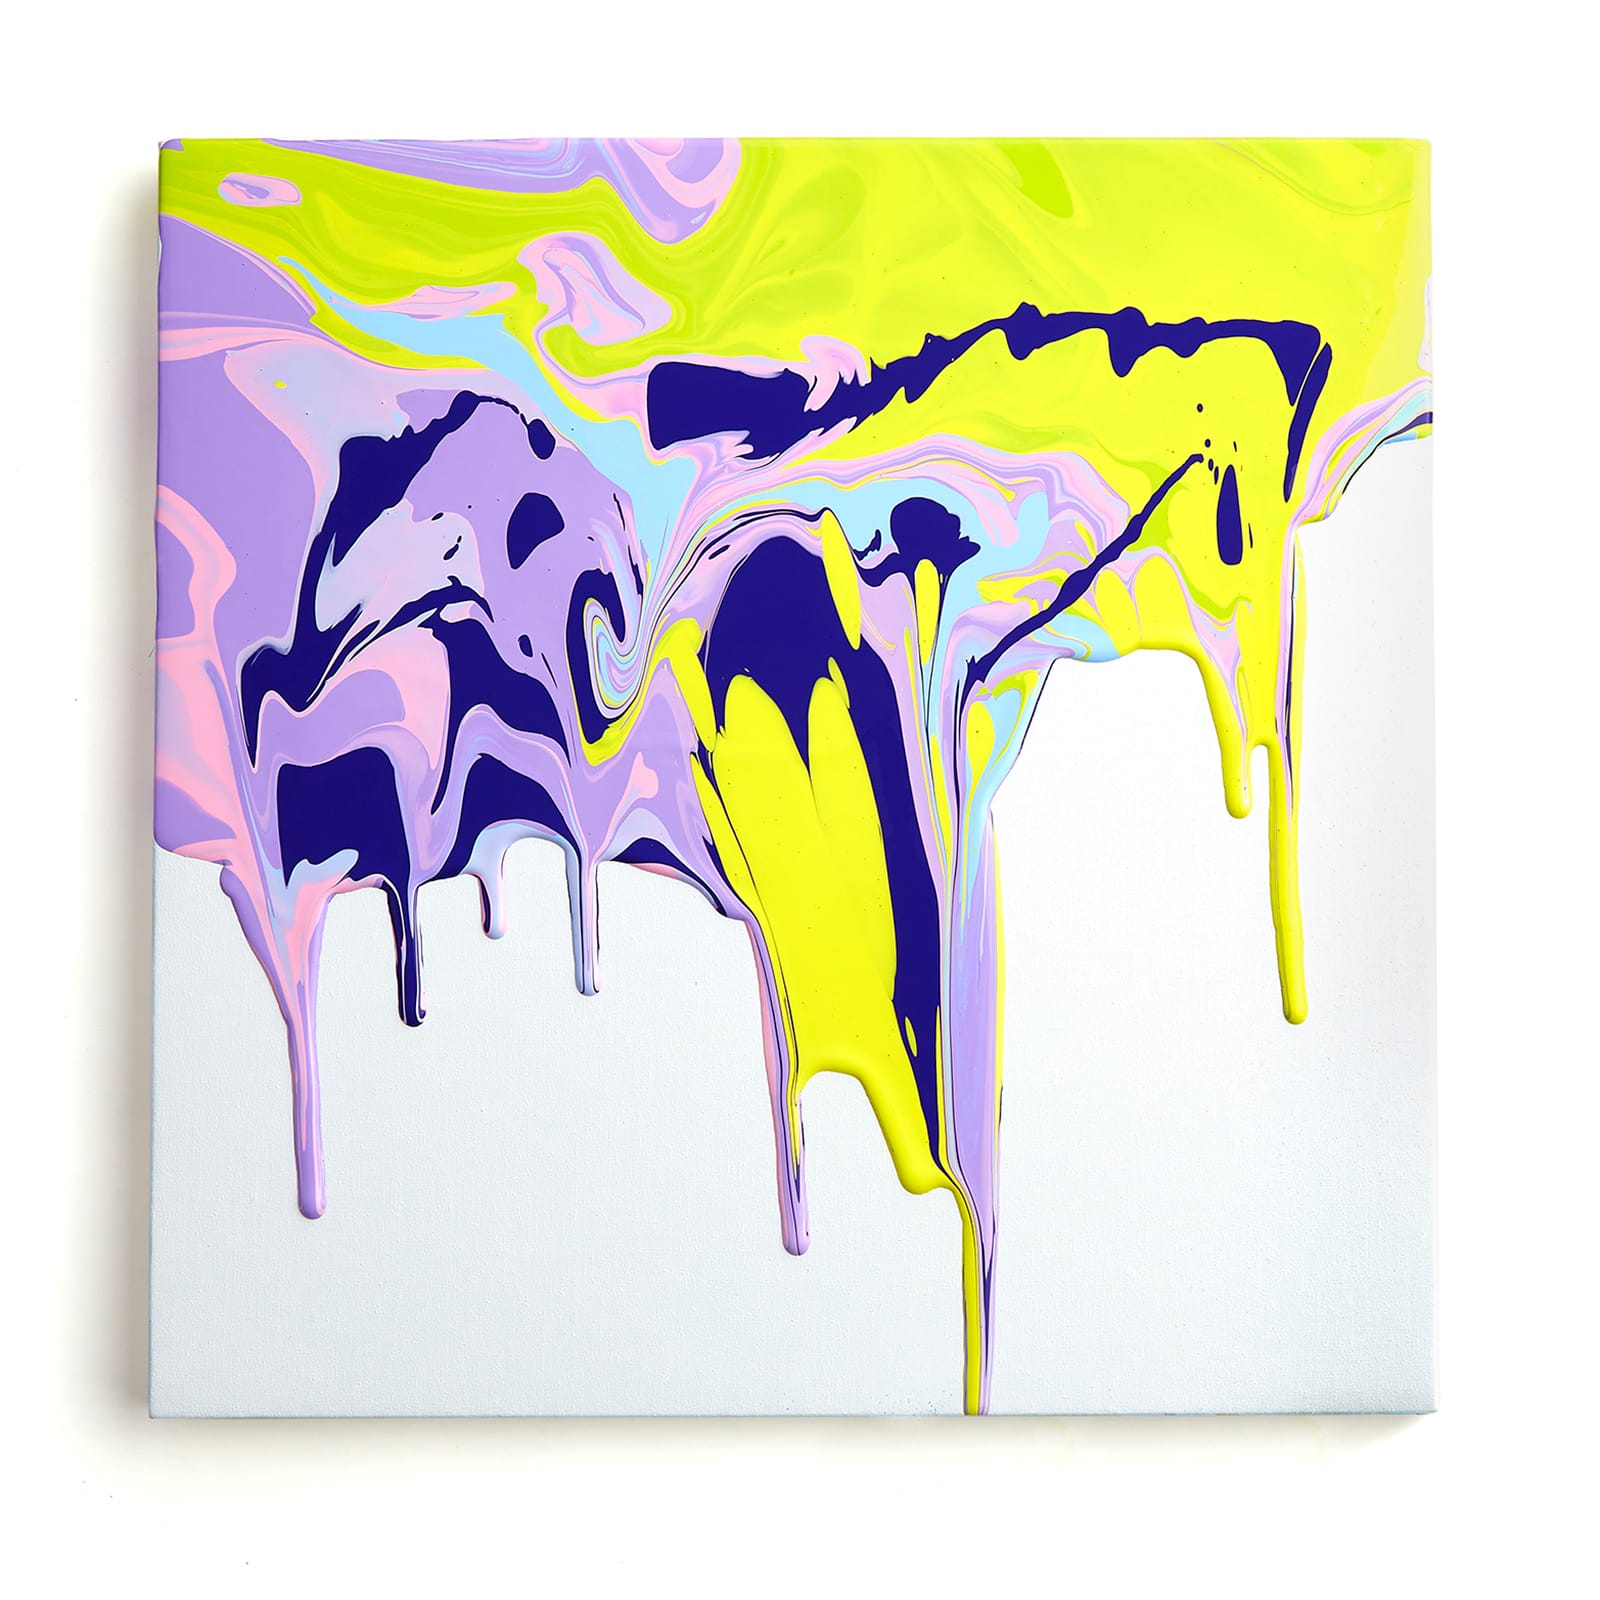 12 Pack: DecoArt&#xAE; Fluid Art Ready-To-Pour Acrylic&#x2122; Paint, 8oz.